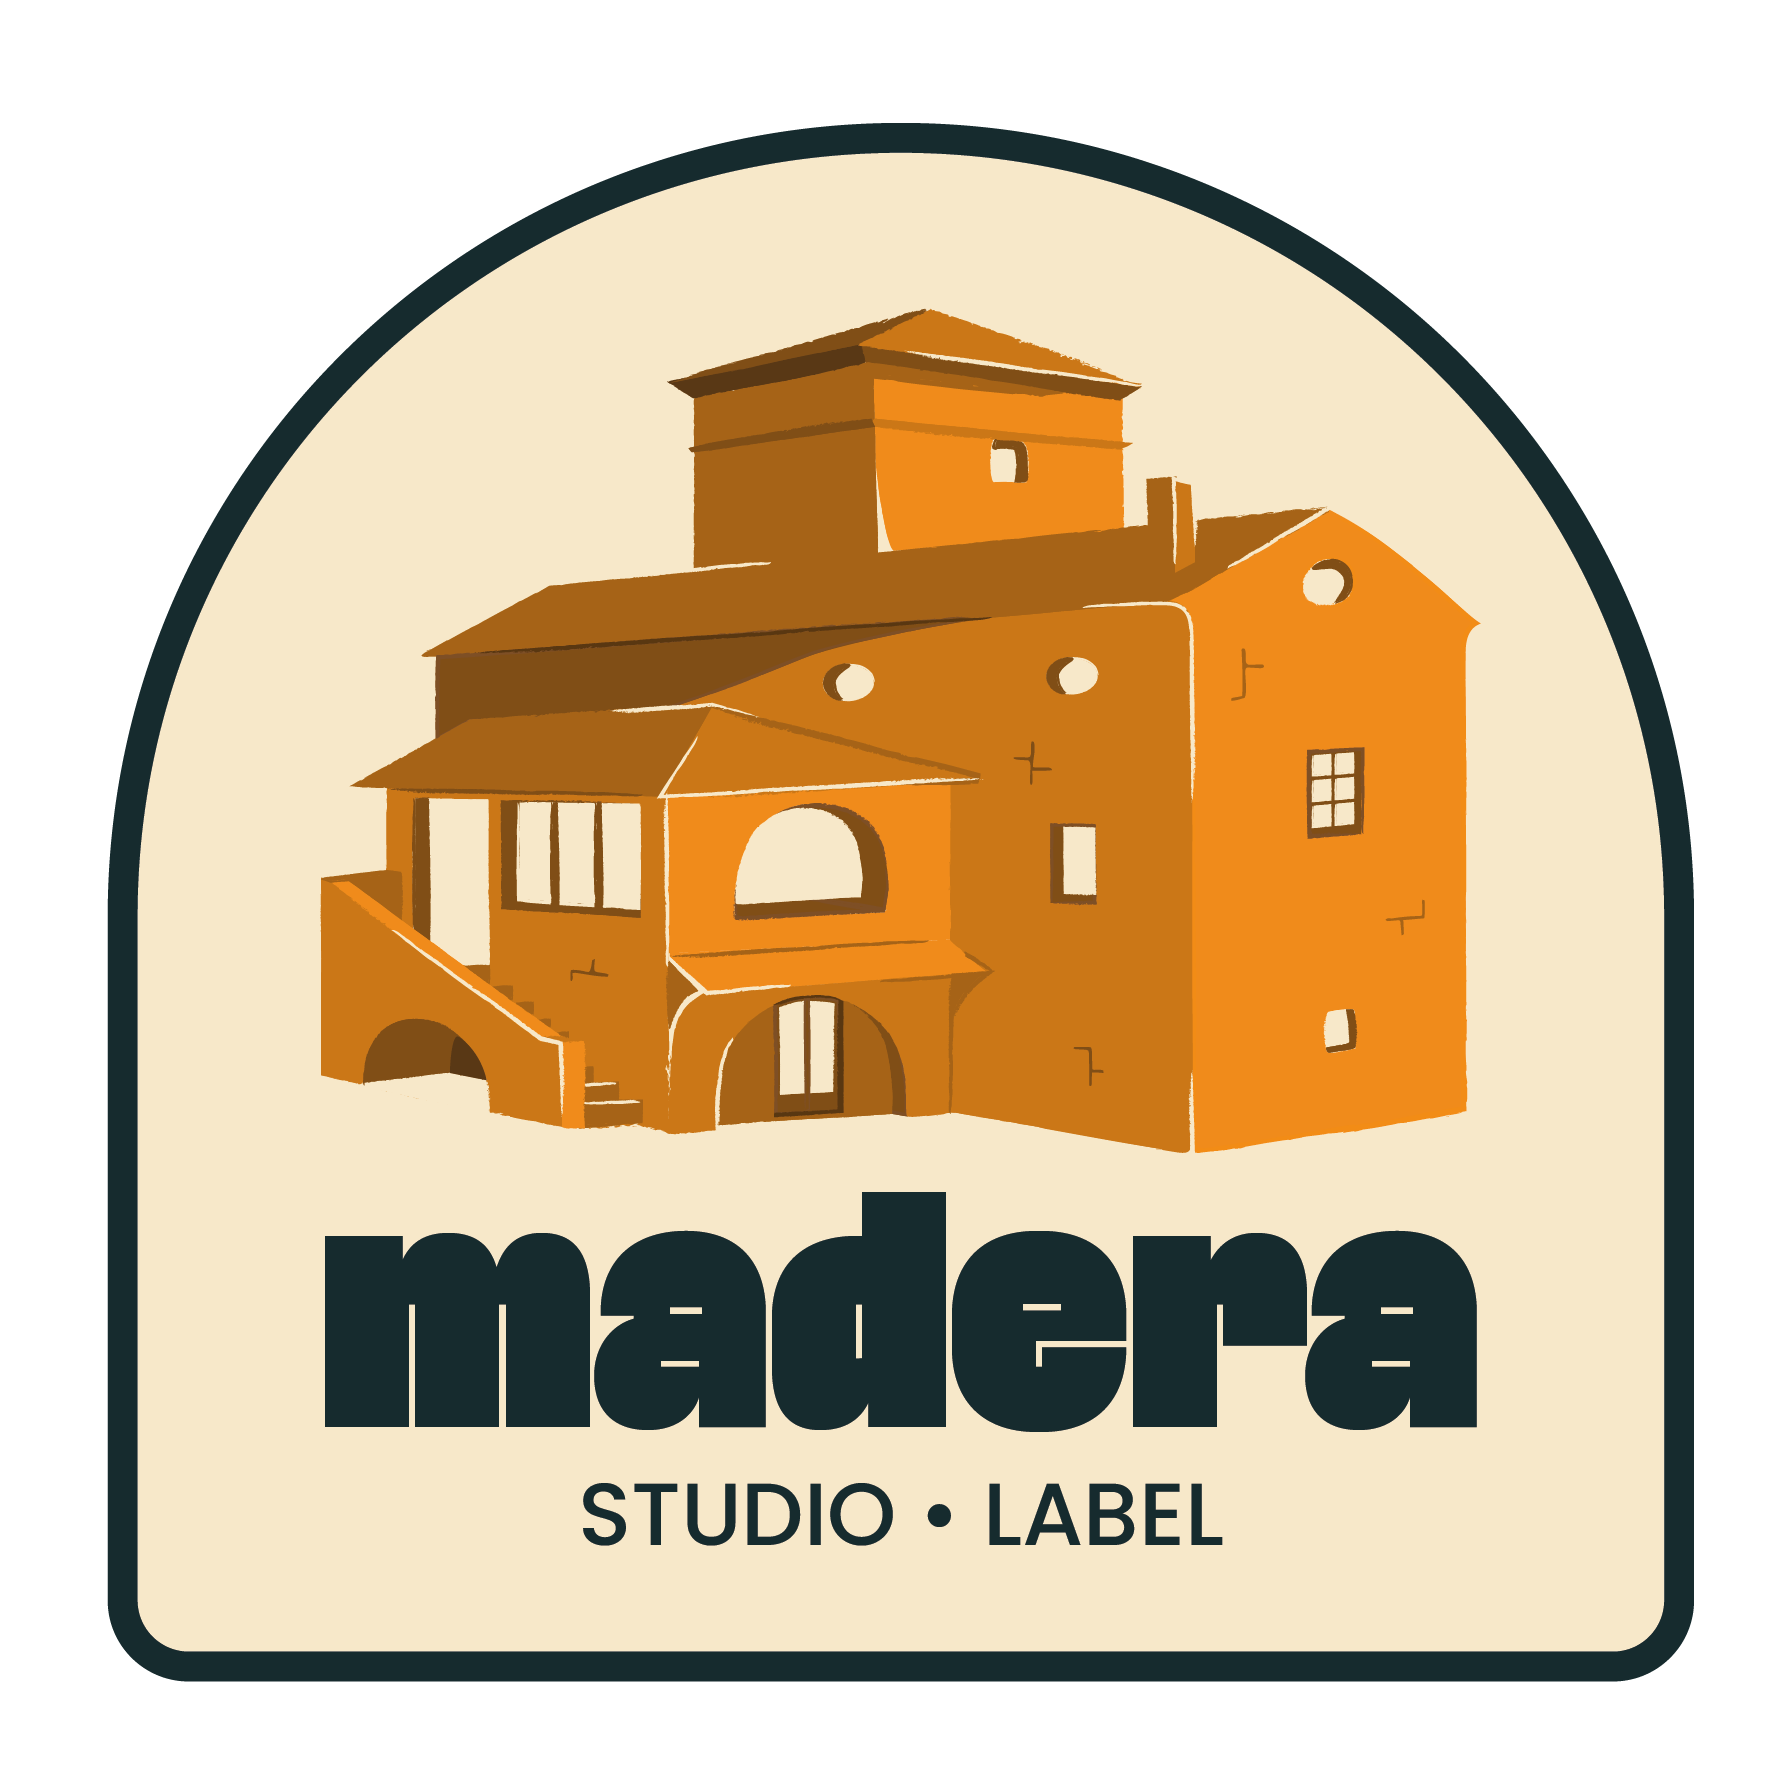 Studio Madera